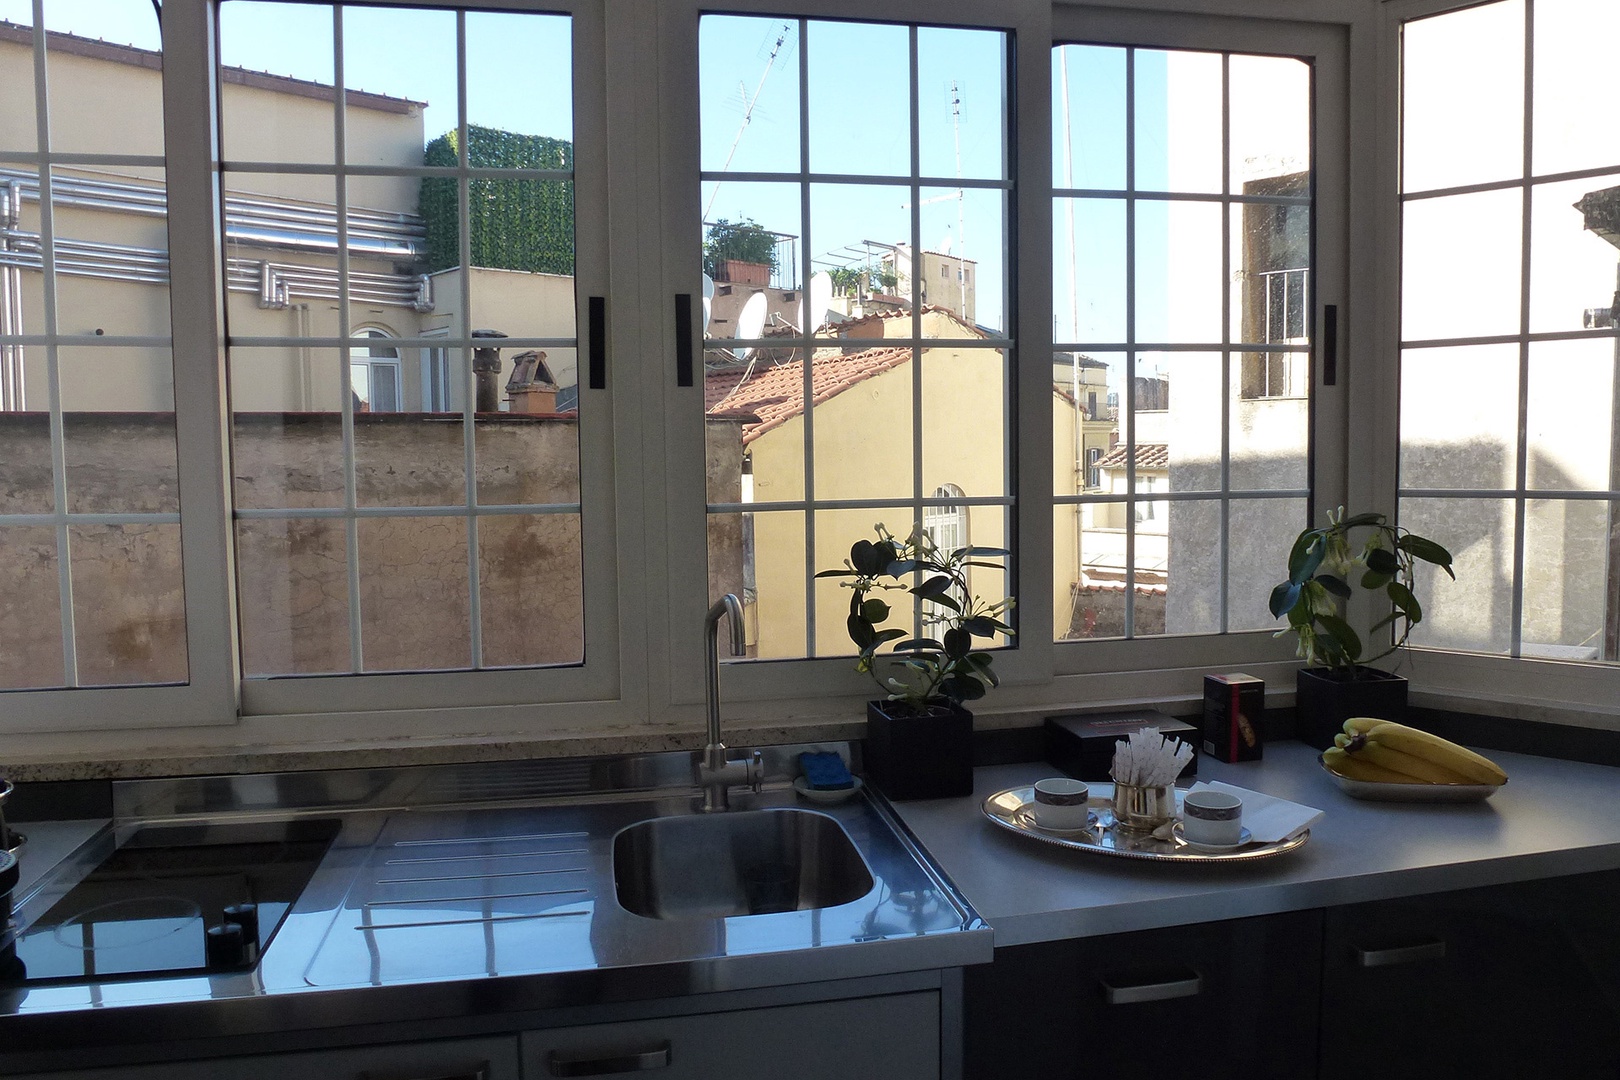 Bright kitchen has nice views too.